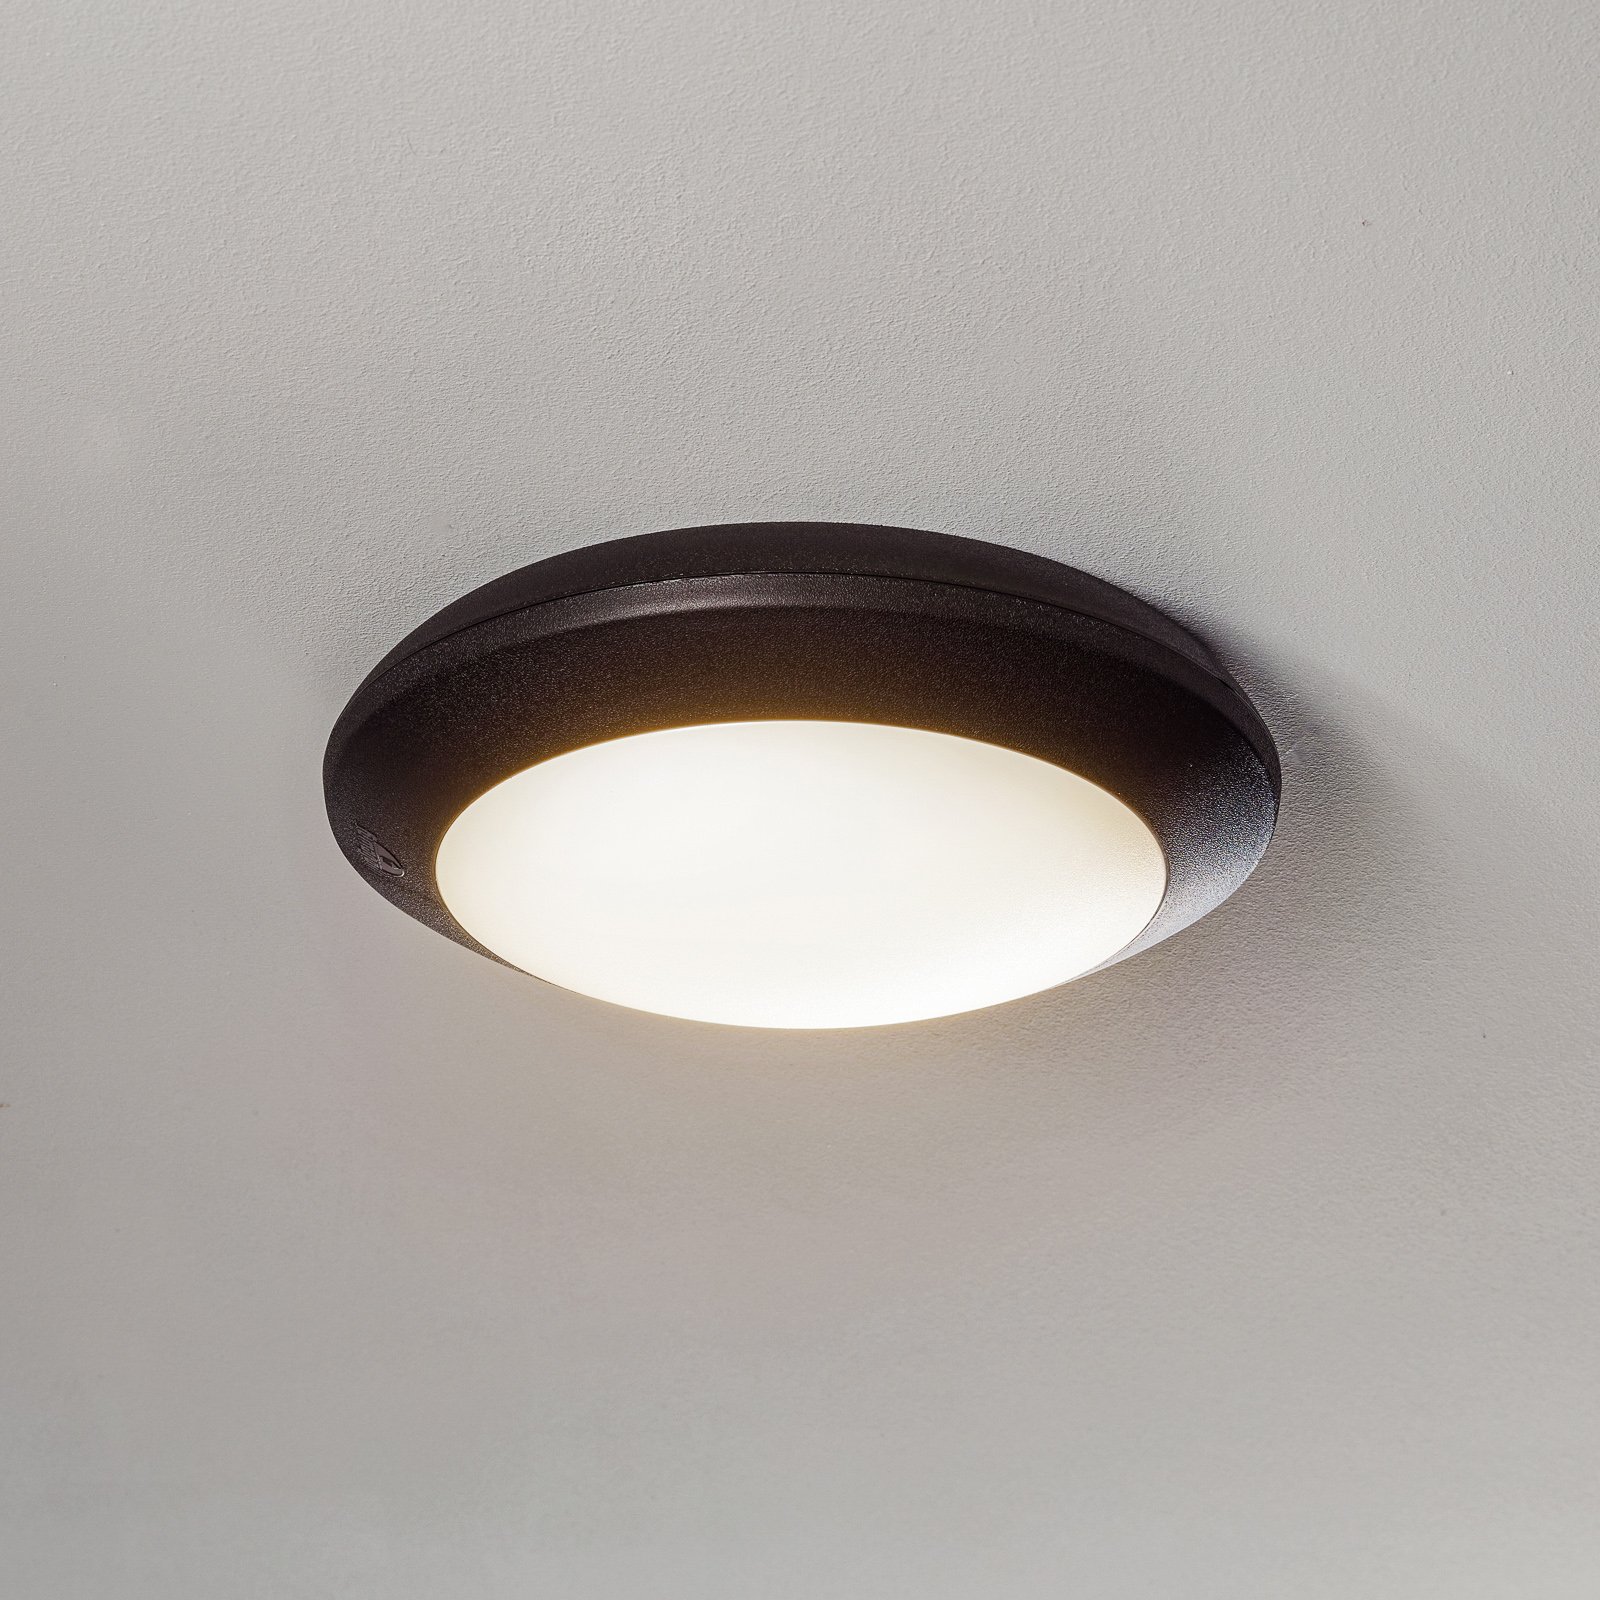 Lampa sufitowa zewnętrzna LED Carlo, czarna, CCT